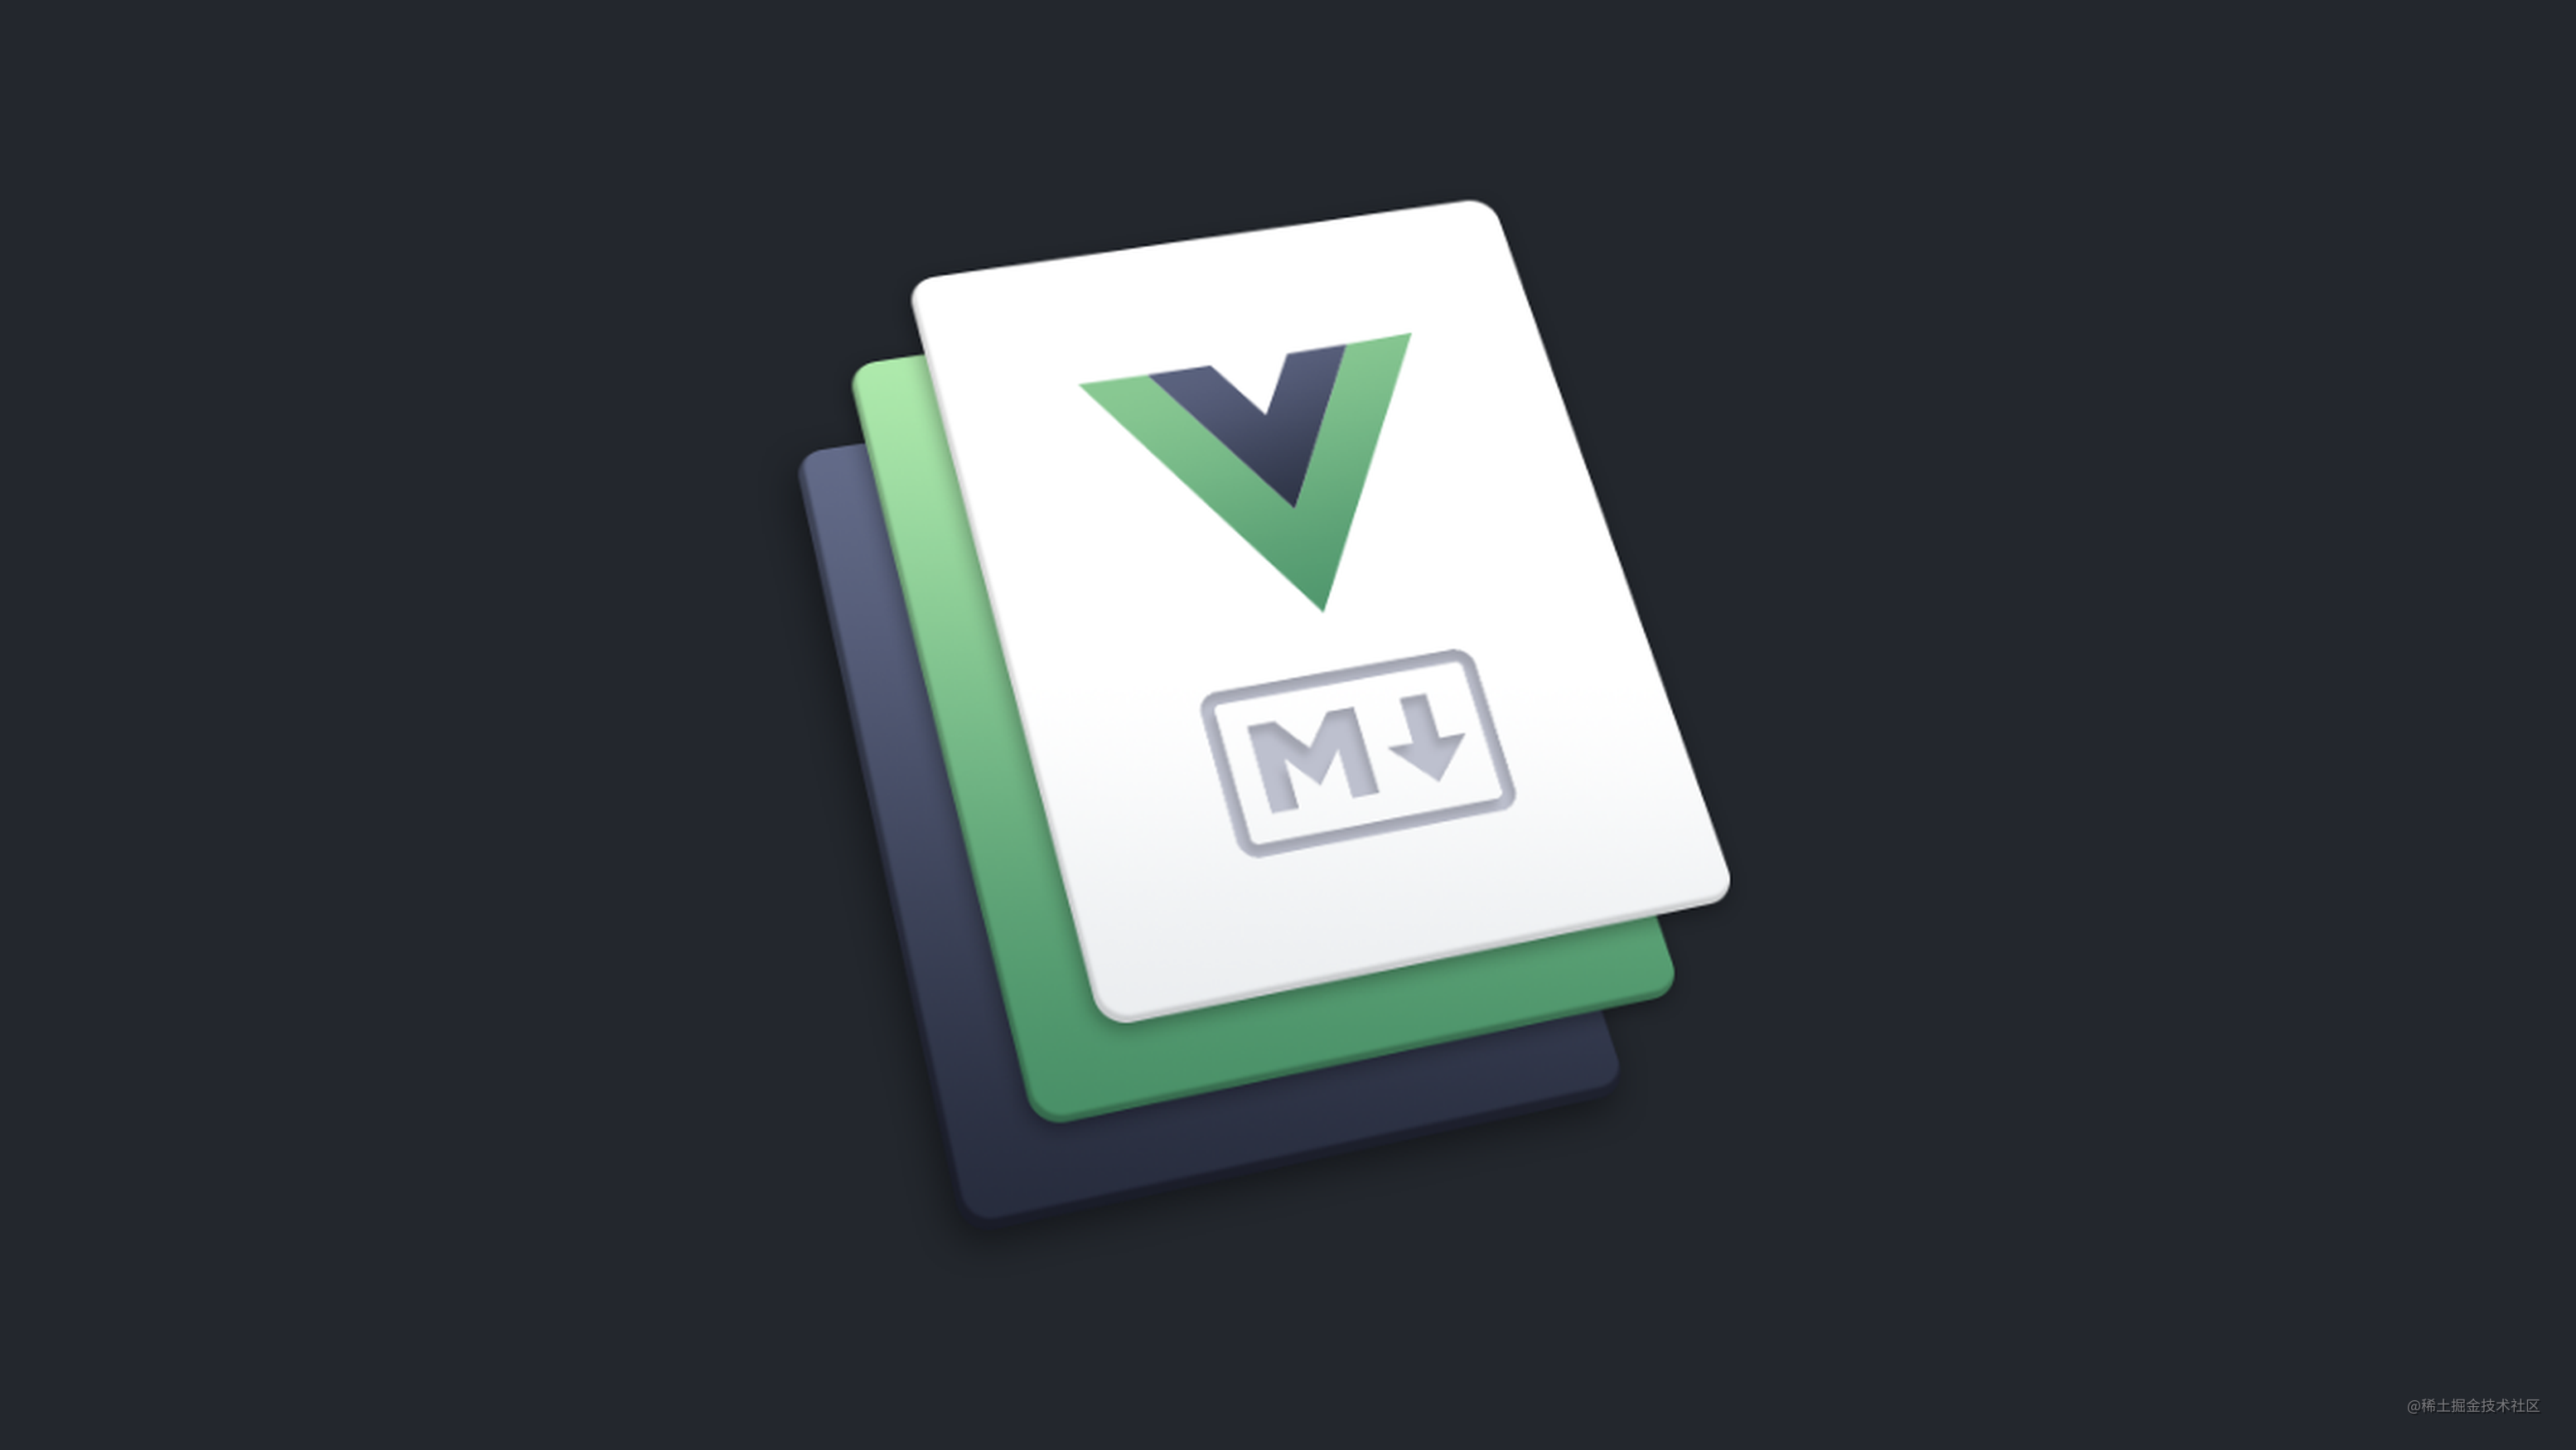 VuePress 博客优化之增加 Vssue 评论功能